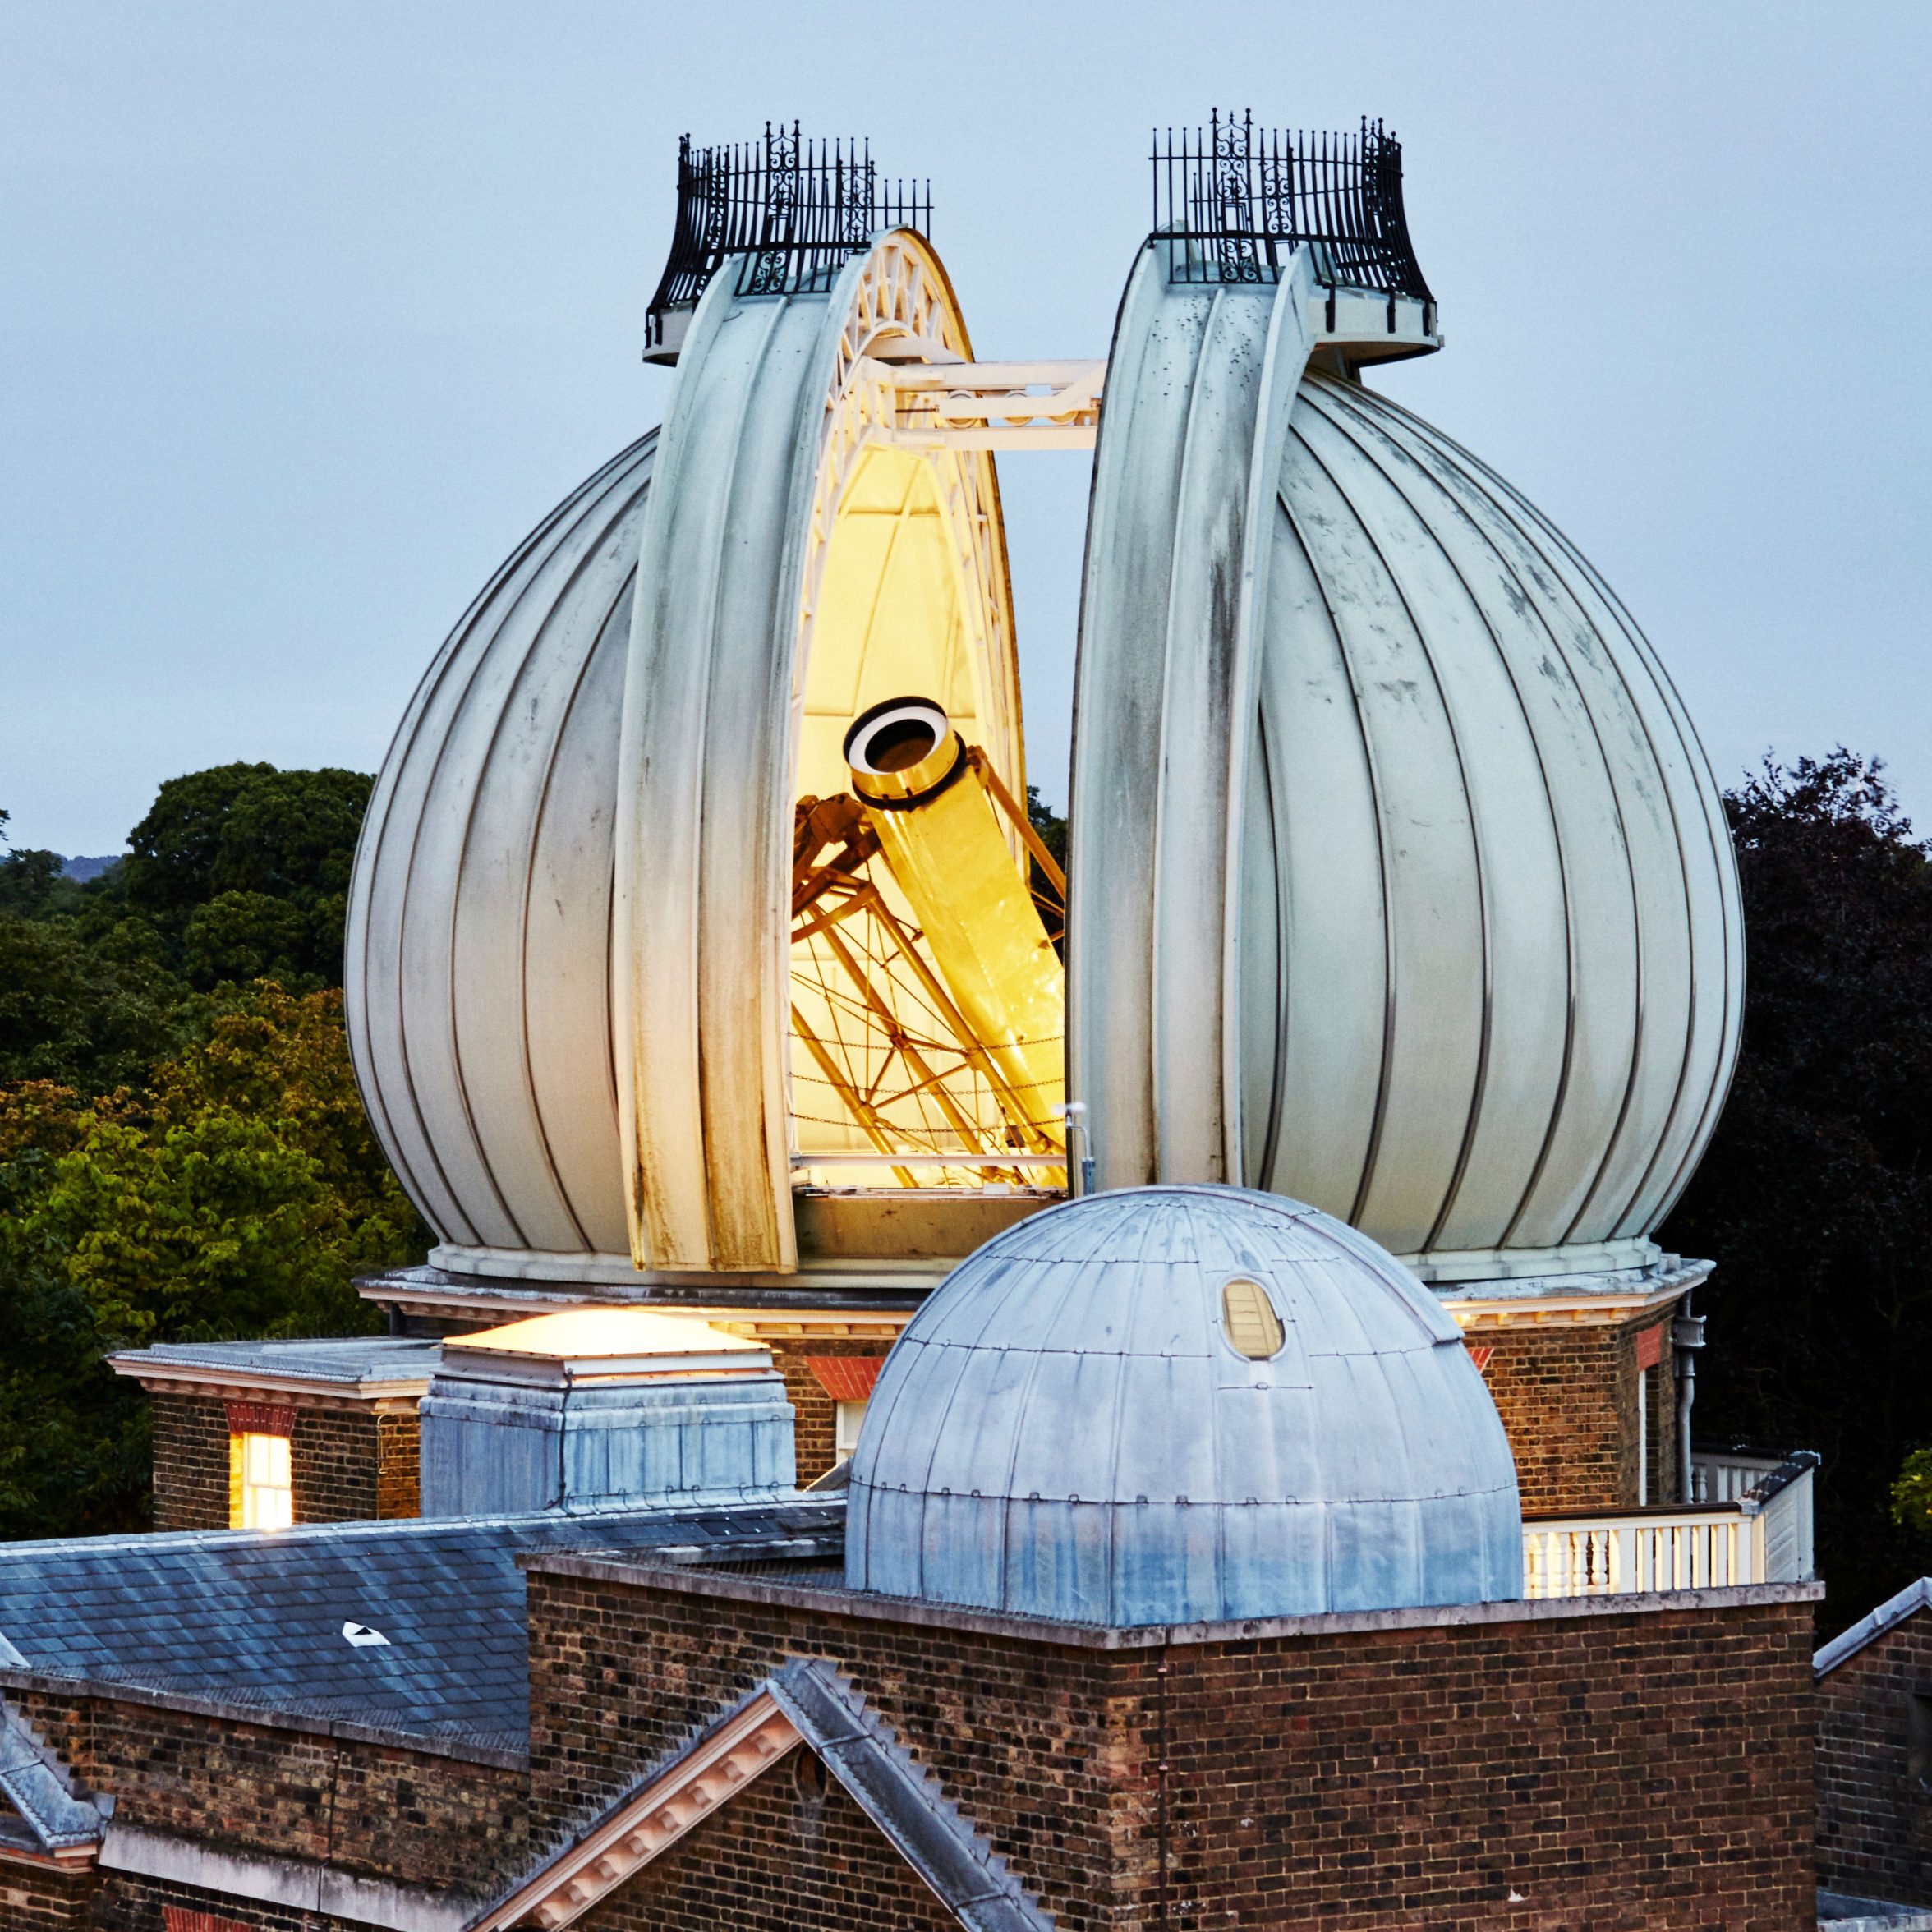 royal observatory greenwich